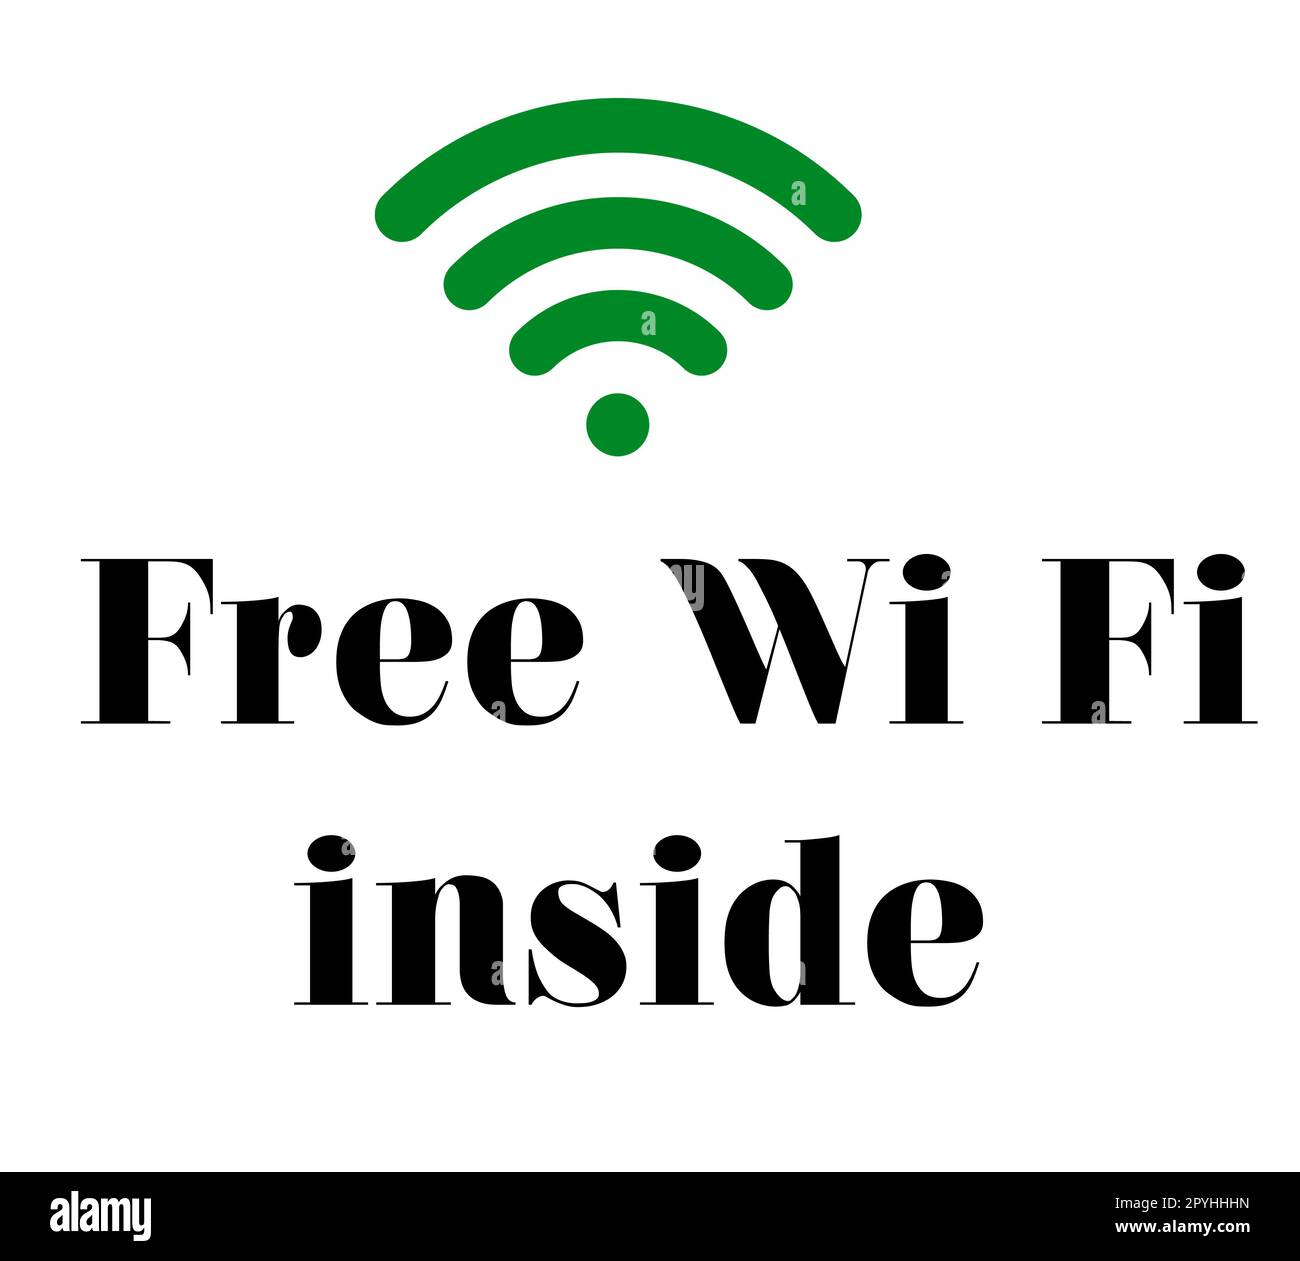 Free wi fi inside text Stock Photo